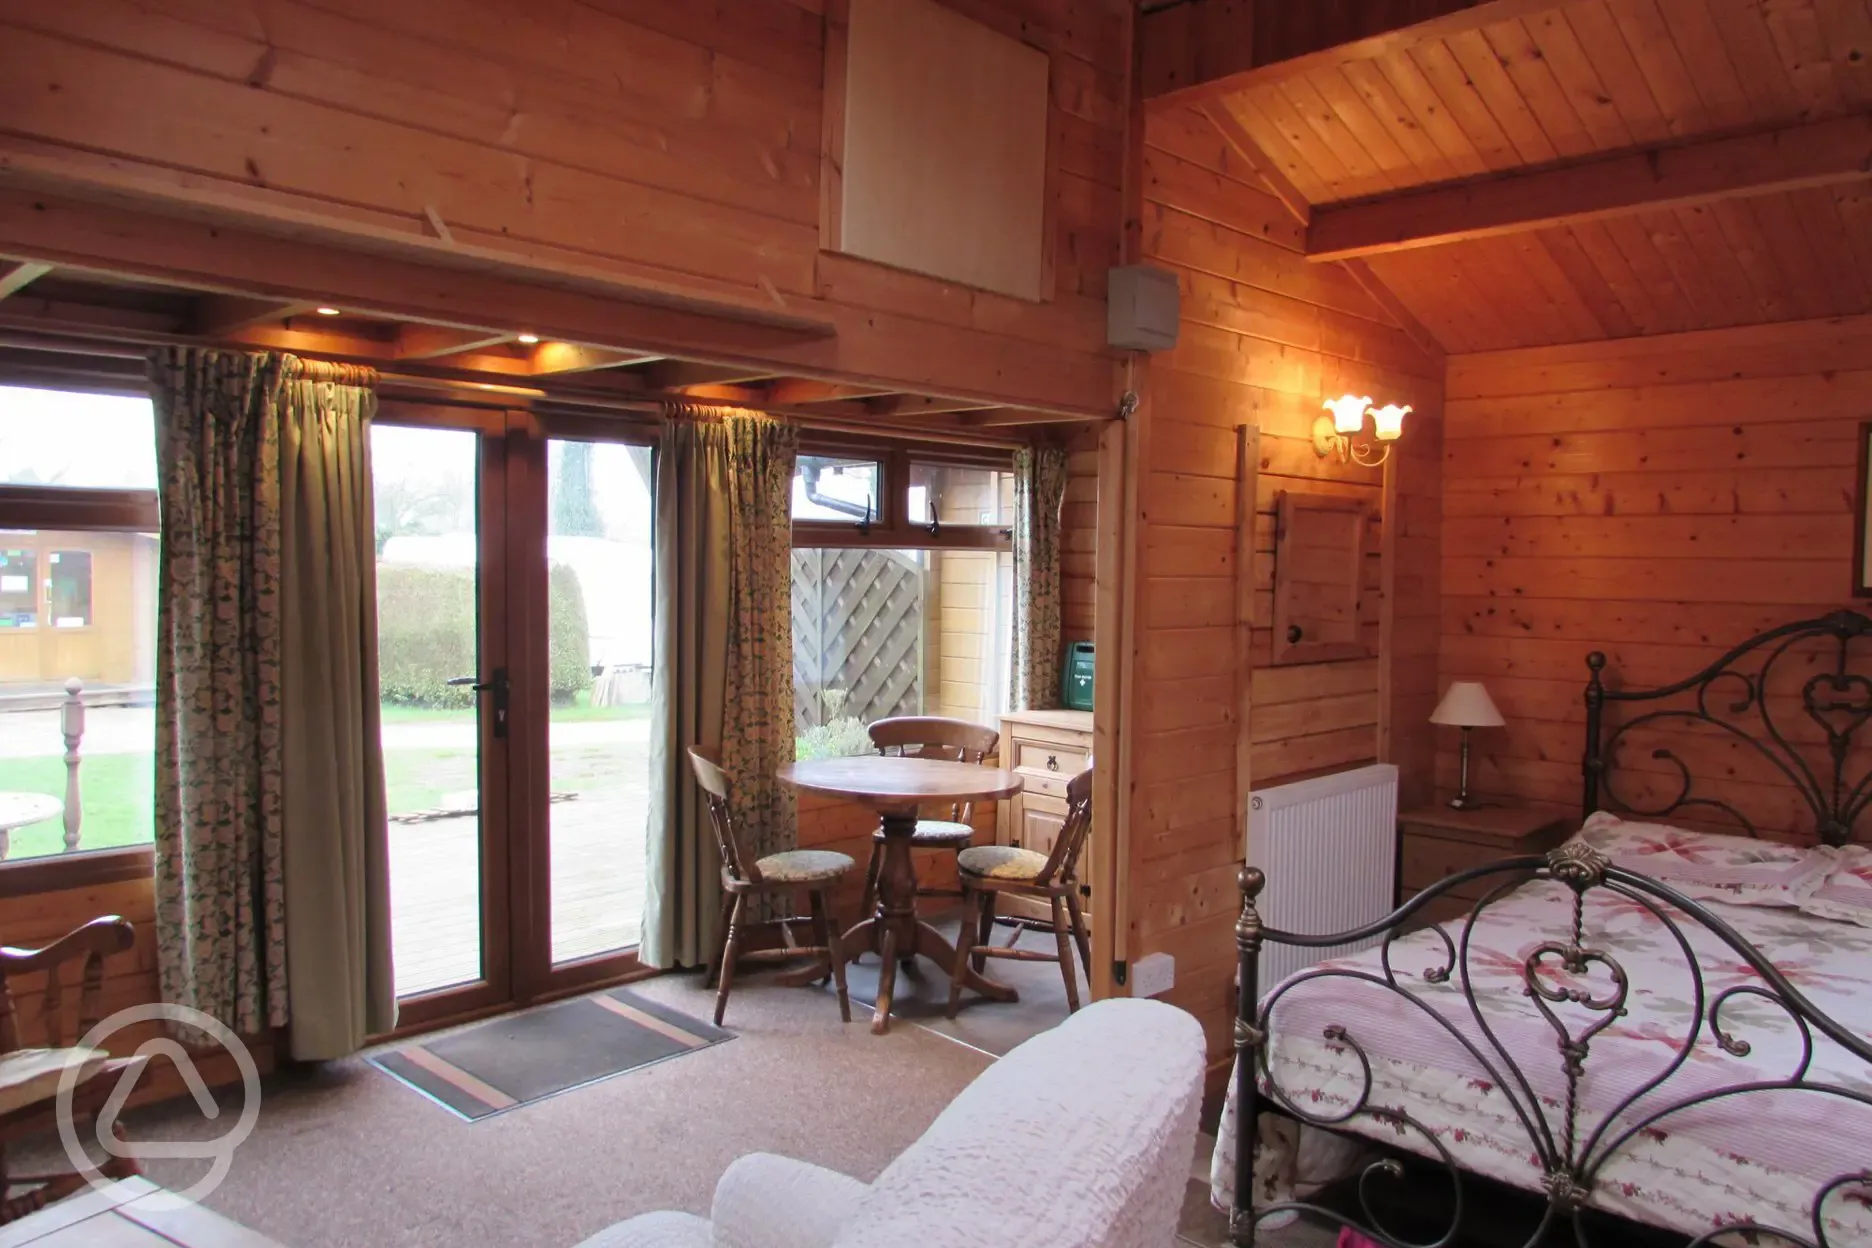 Inside Cherrywood cabin